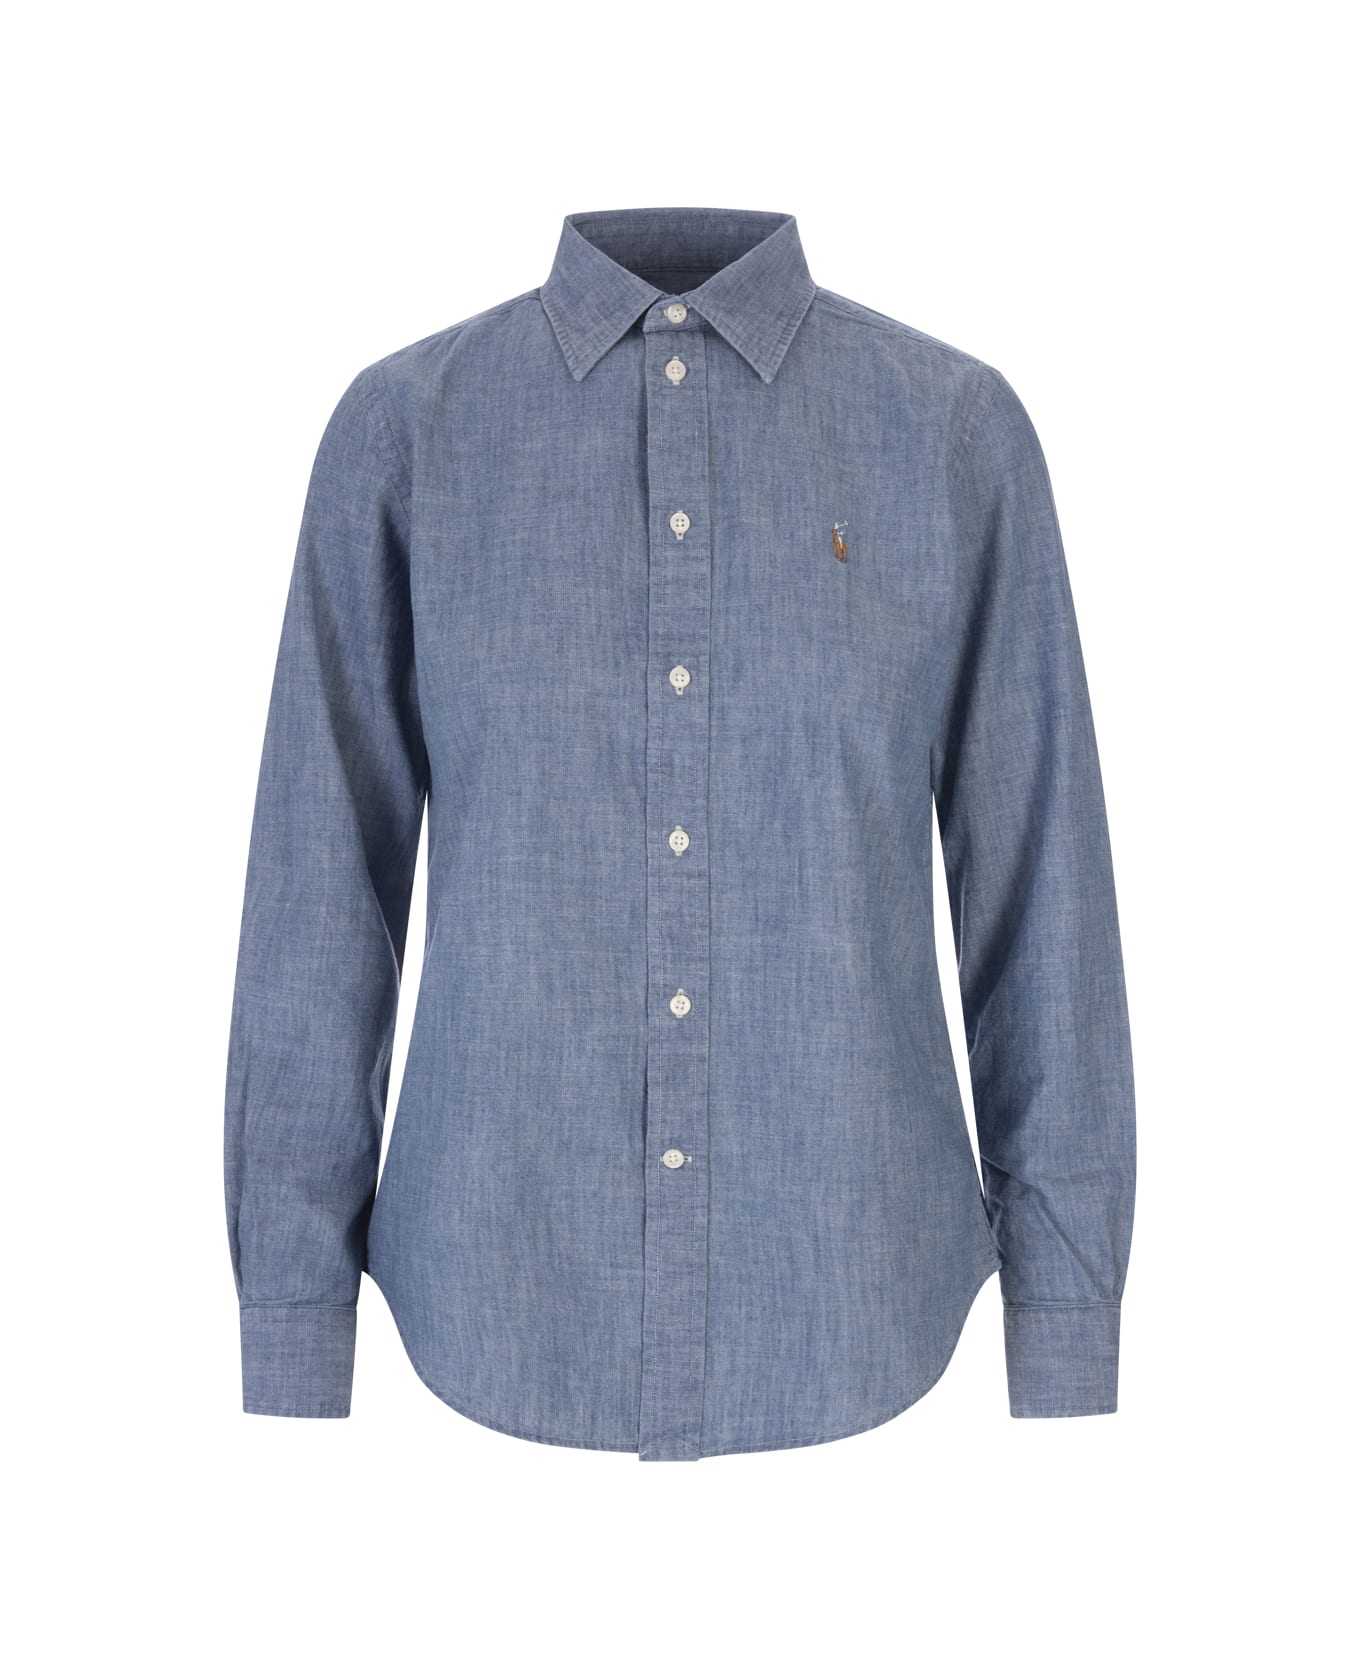 Ralph Lauren Shirt In Indigo Cotton Chambray - Blue